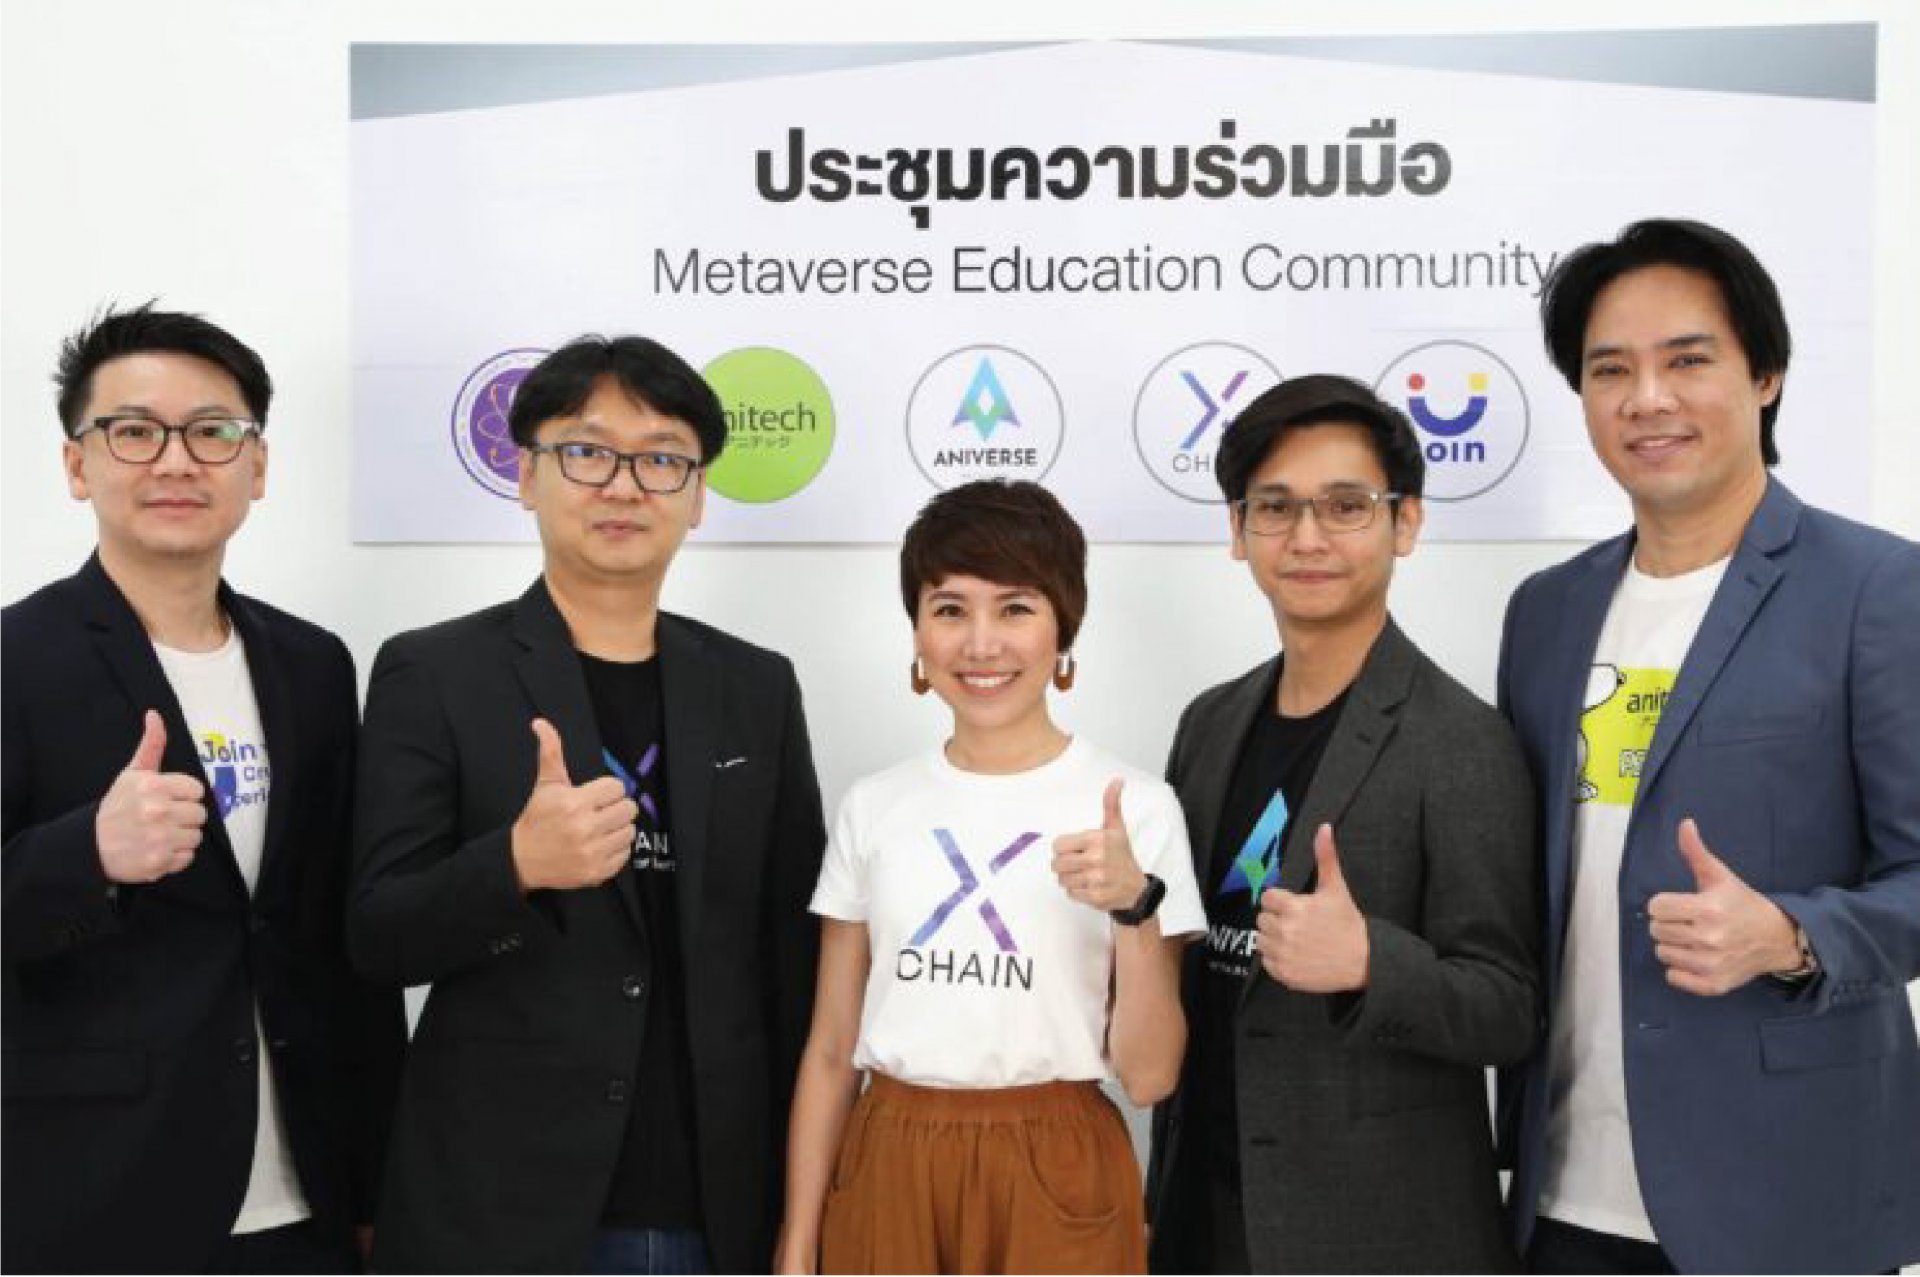 Aniverse Metaverse ลงนาม 20 มหาลัยดังพัฒนาระบบการศึกษาไทย พร้อมลิสต์ ANIV Token บน “COINSTORE”